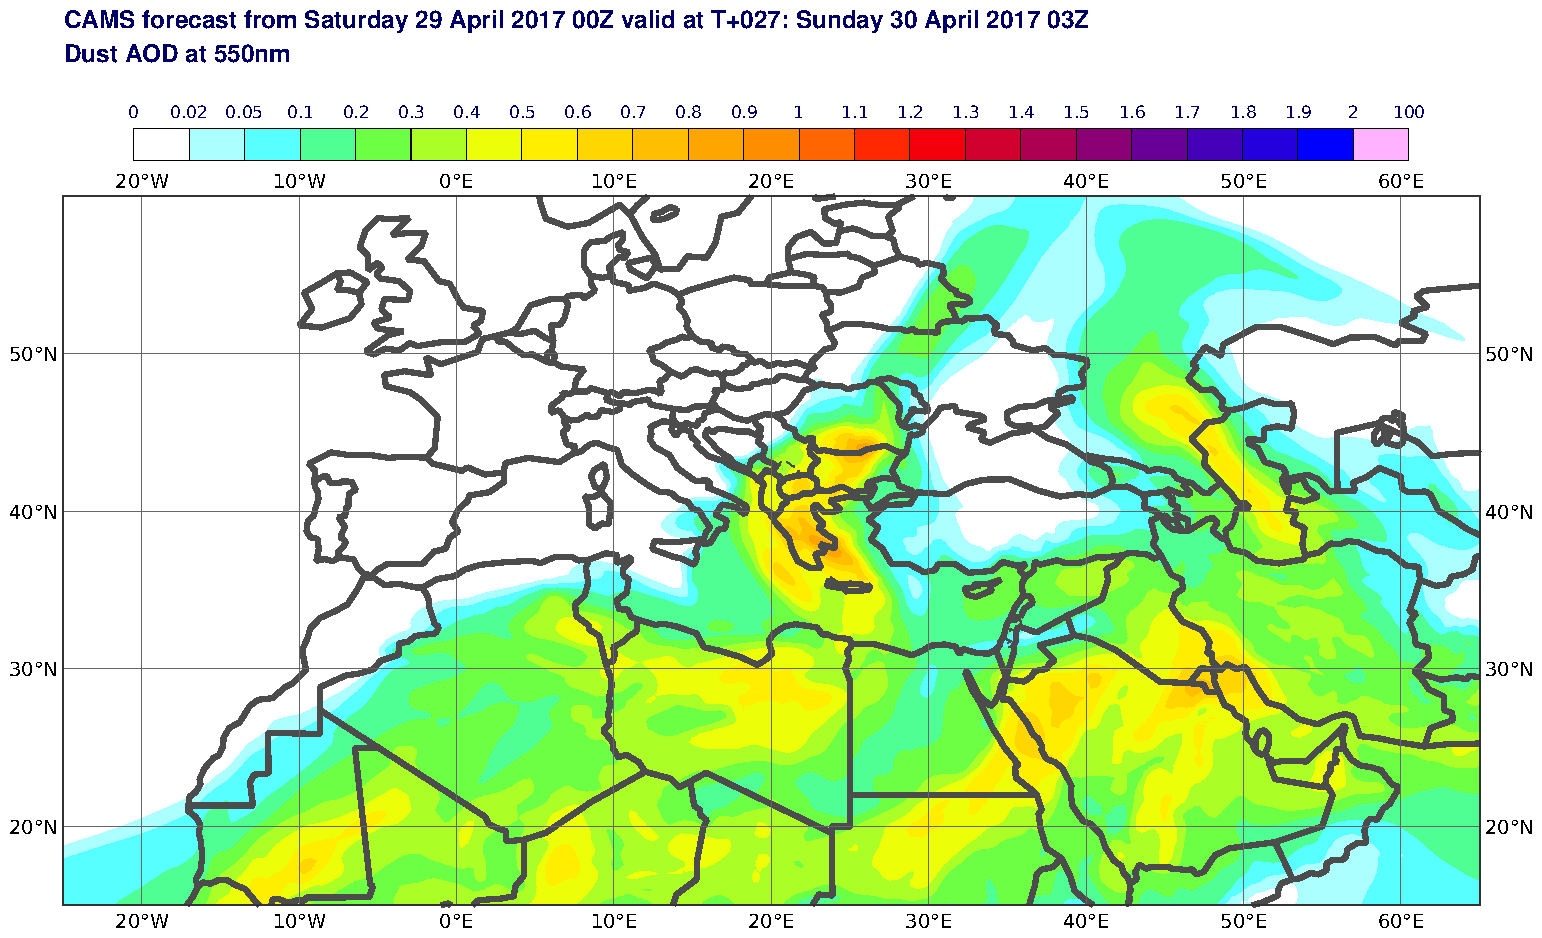 Dust AOD at 550nm valid at T27 - 2017-04-30 03:00